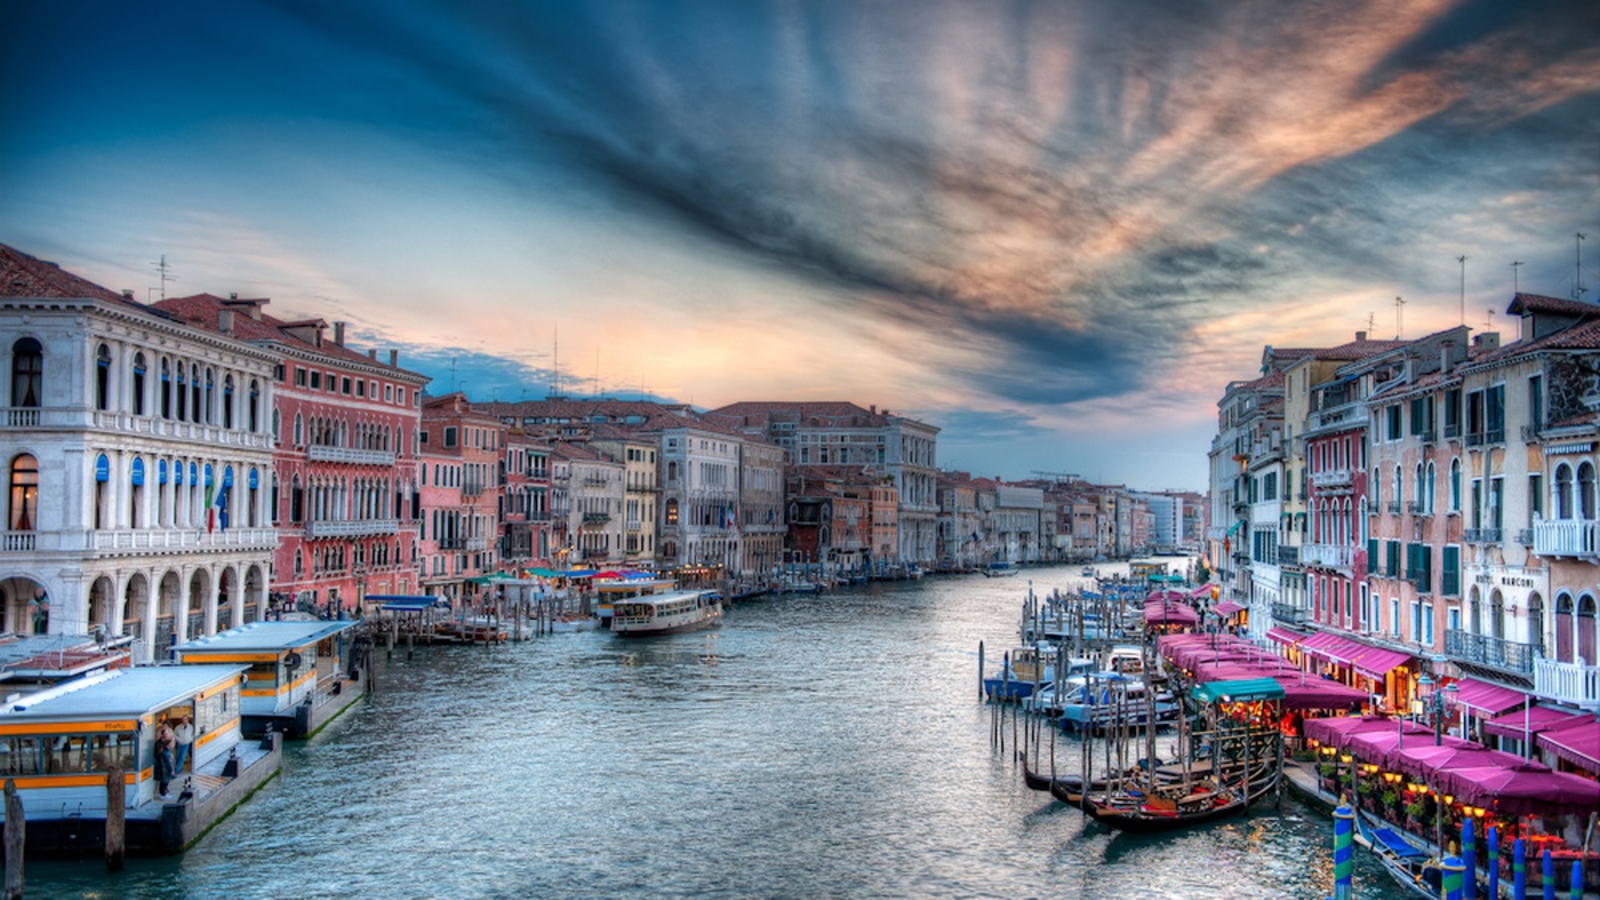 44 Venice Italy Desktop Wallpaper On Wallpapersafari